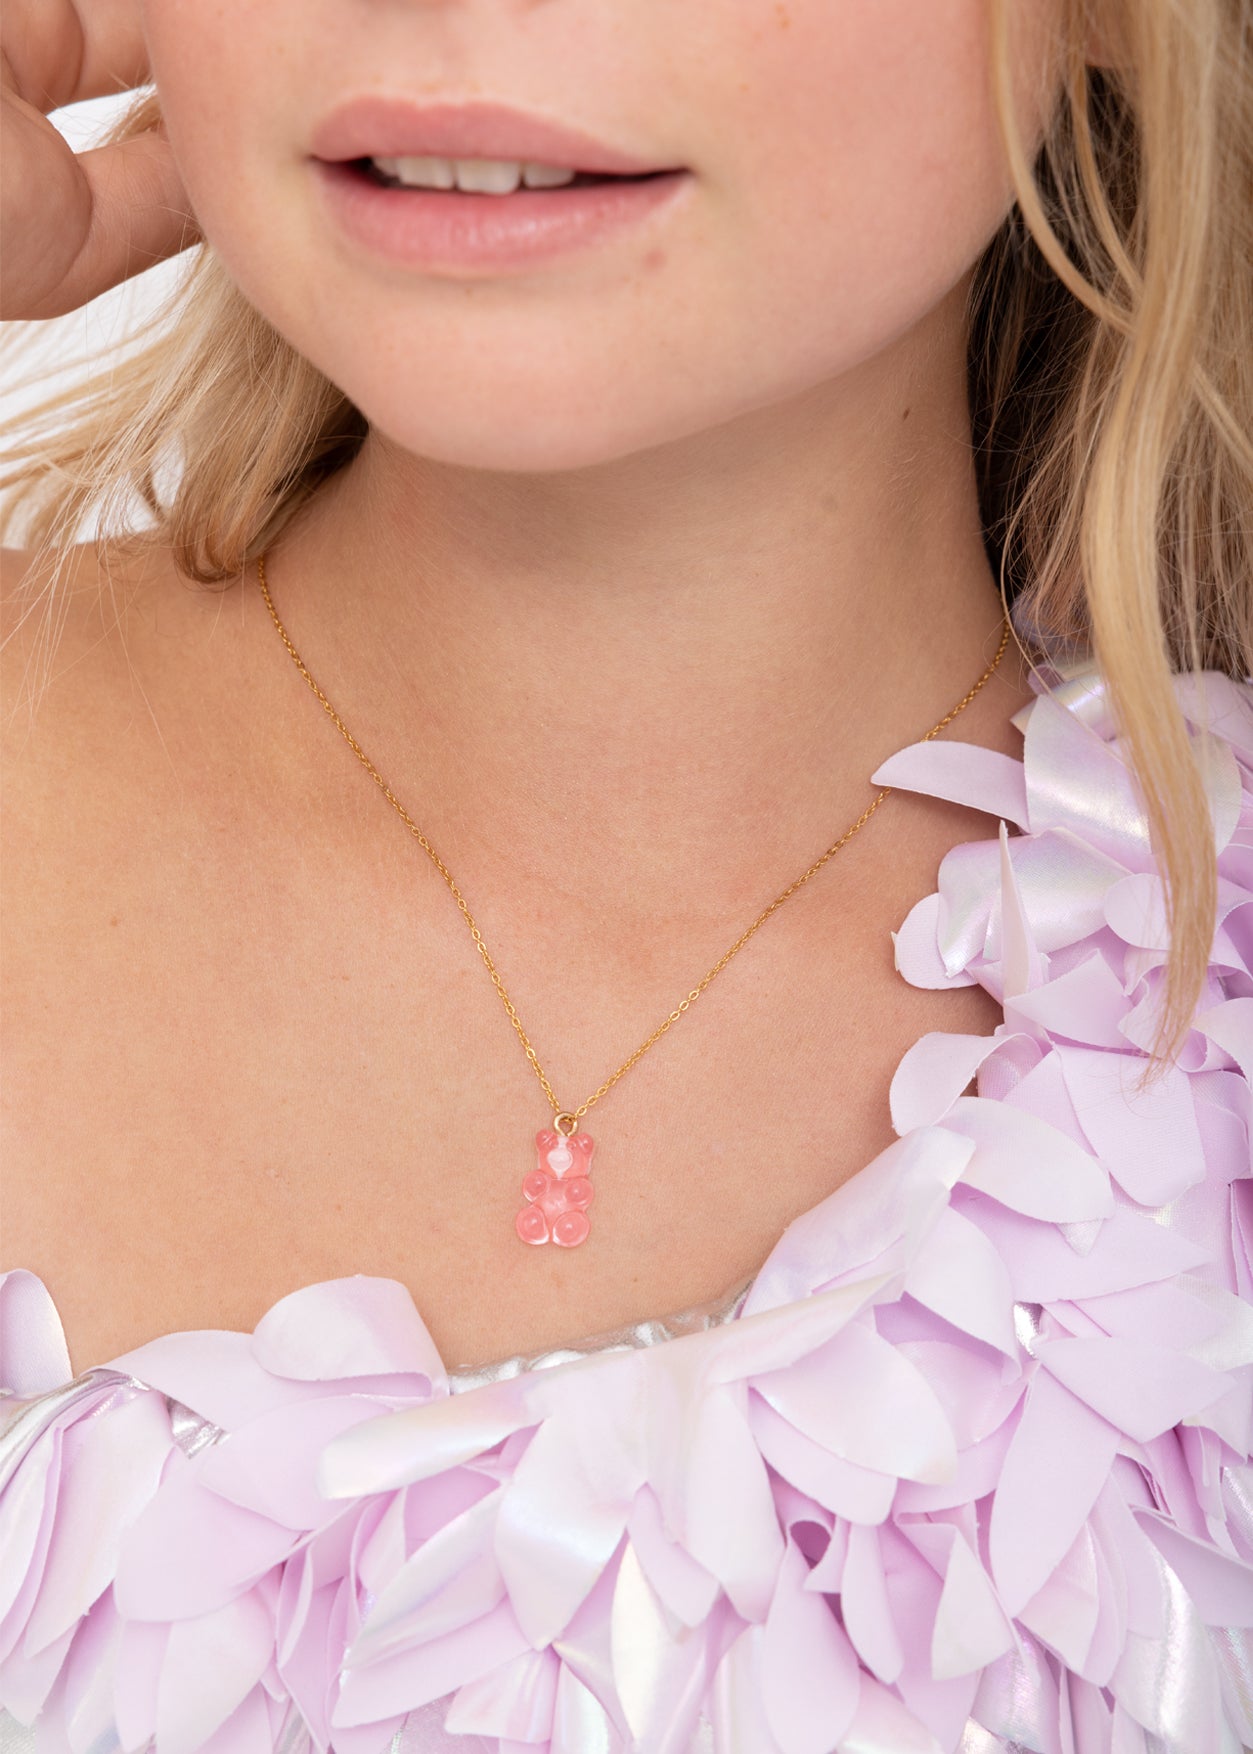 gummy bear necklace for girls